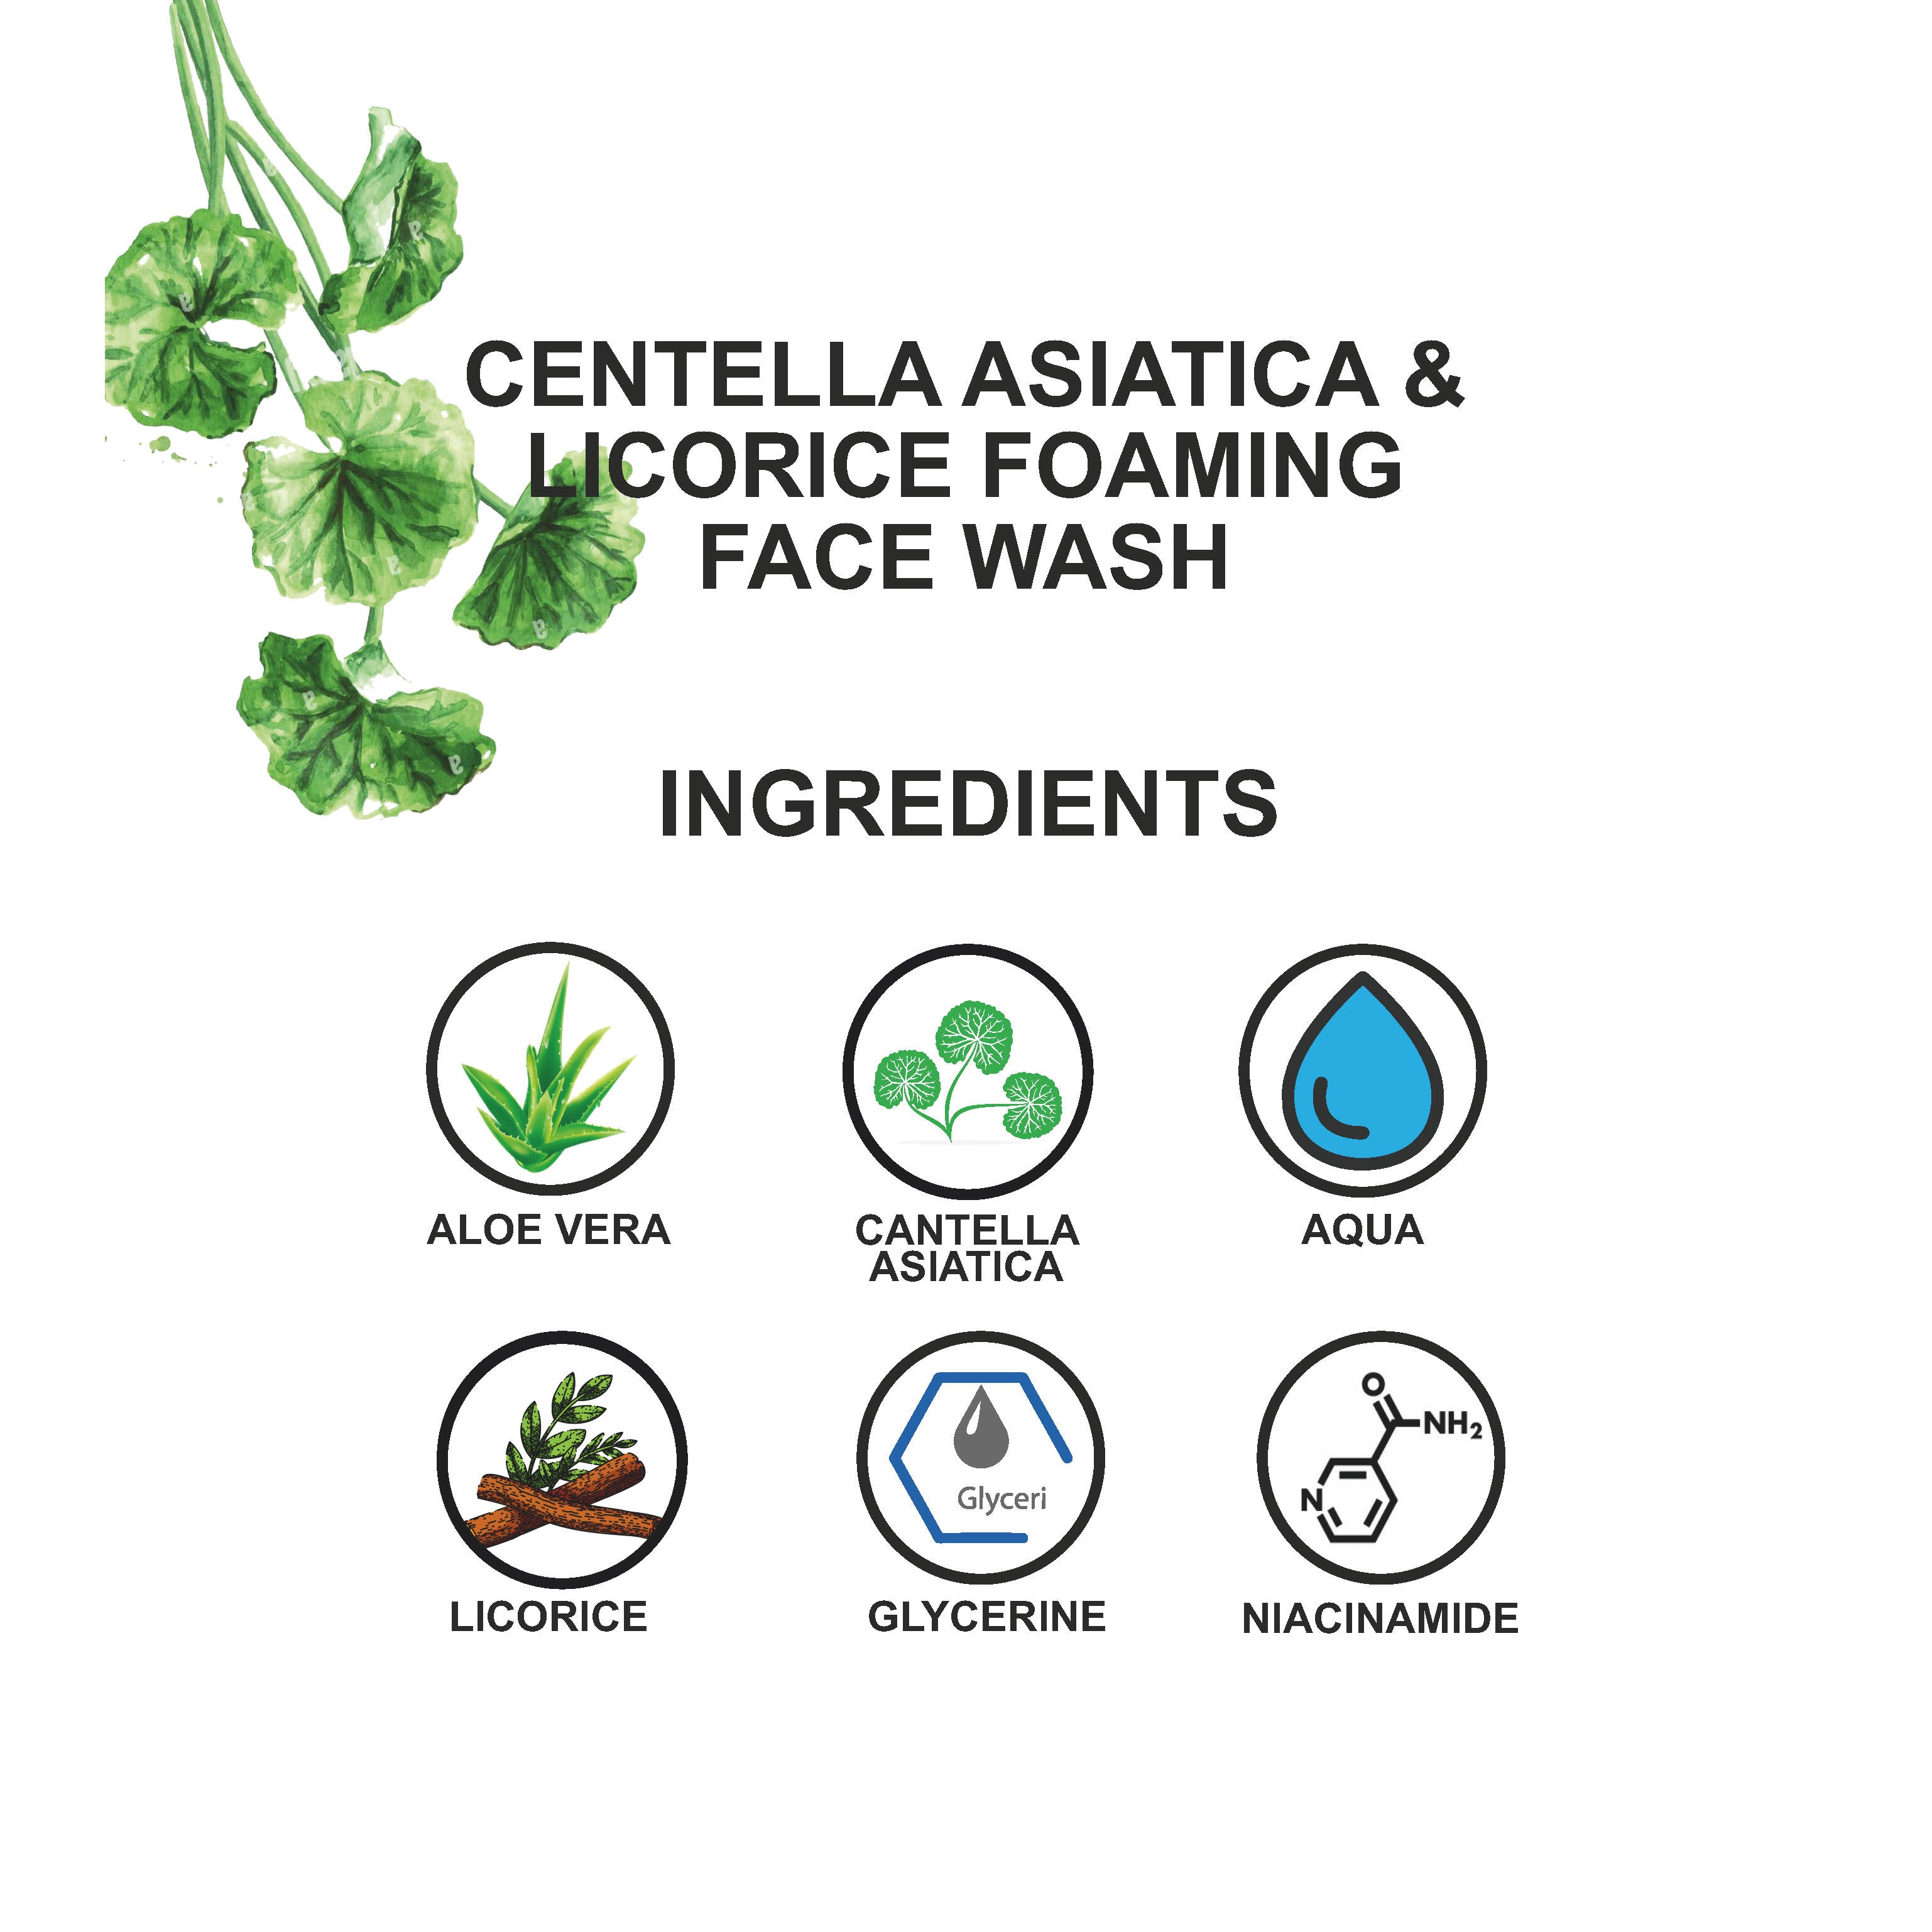 "Love Earth Centella Asiatica & Licorice Foaming Face Wash For Sensitive Skin,Anti Pigmentation,Anti Blemishes,Reduce Freckles 100Ml  "